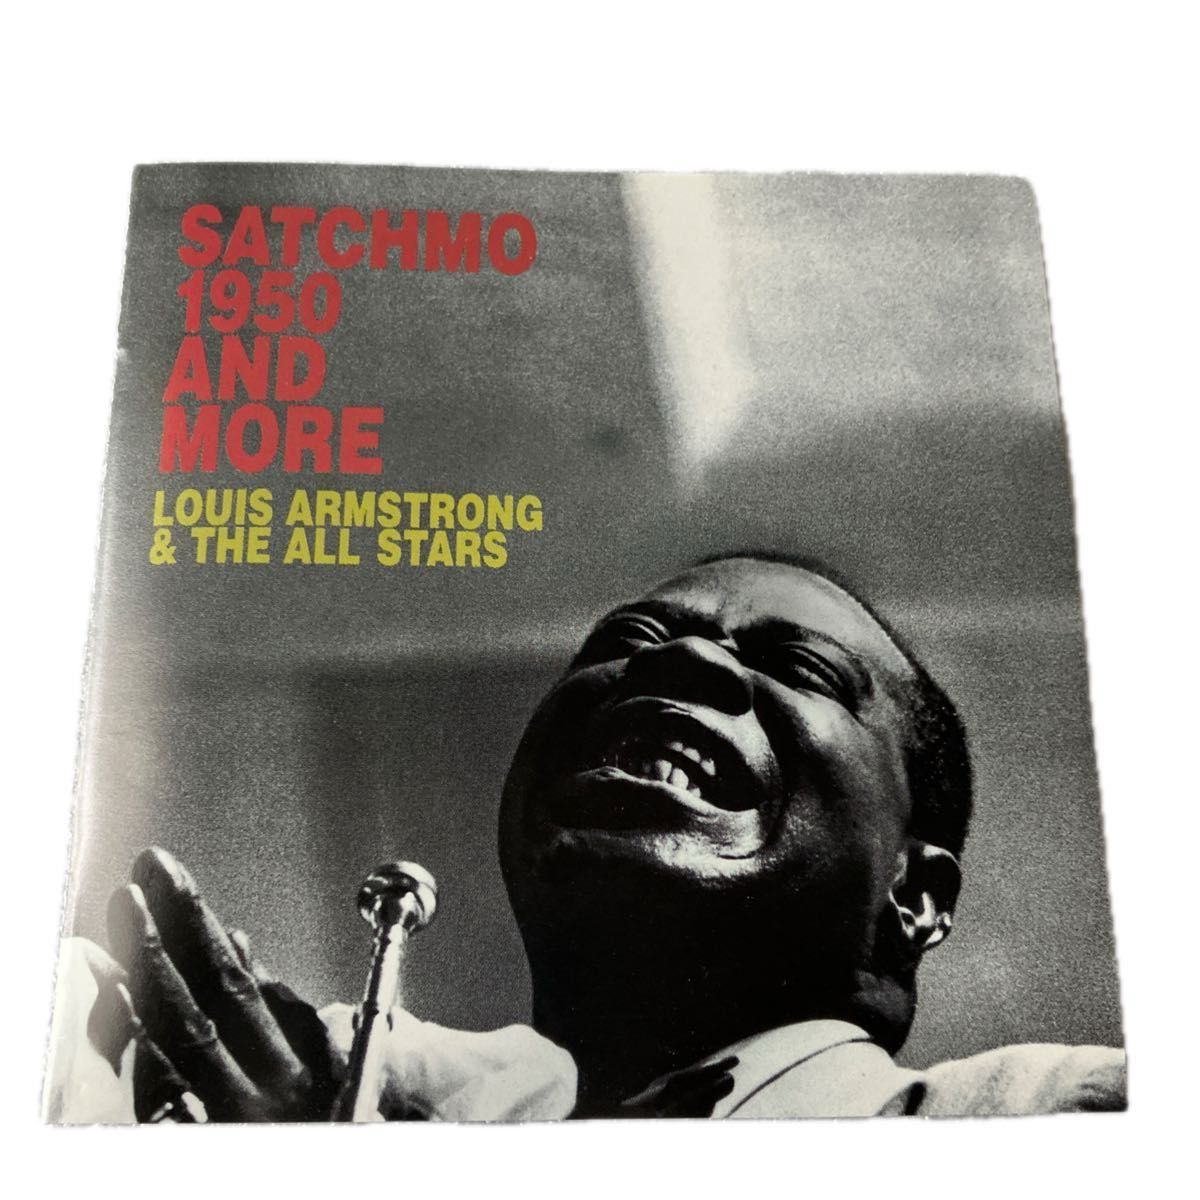 LOUISARMSTRONG&THE ALL STARS /サッチモ 1950 アンド モア　CDセット